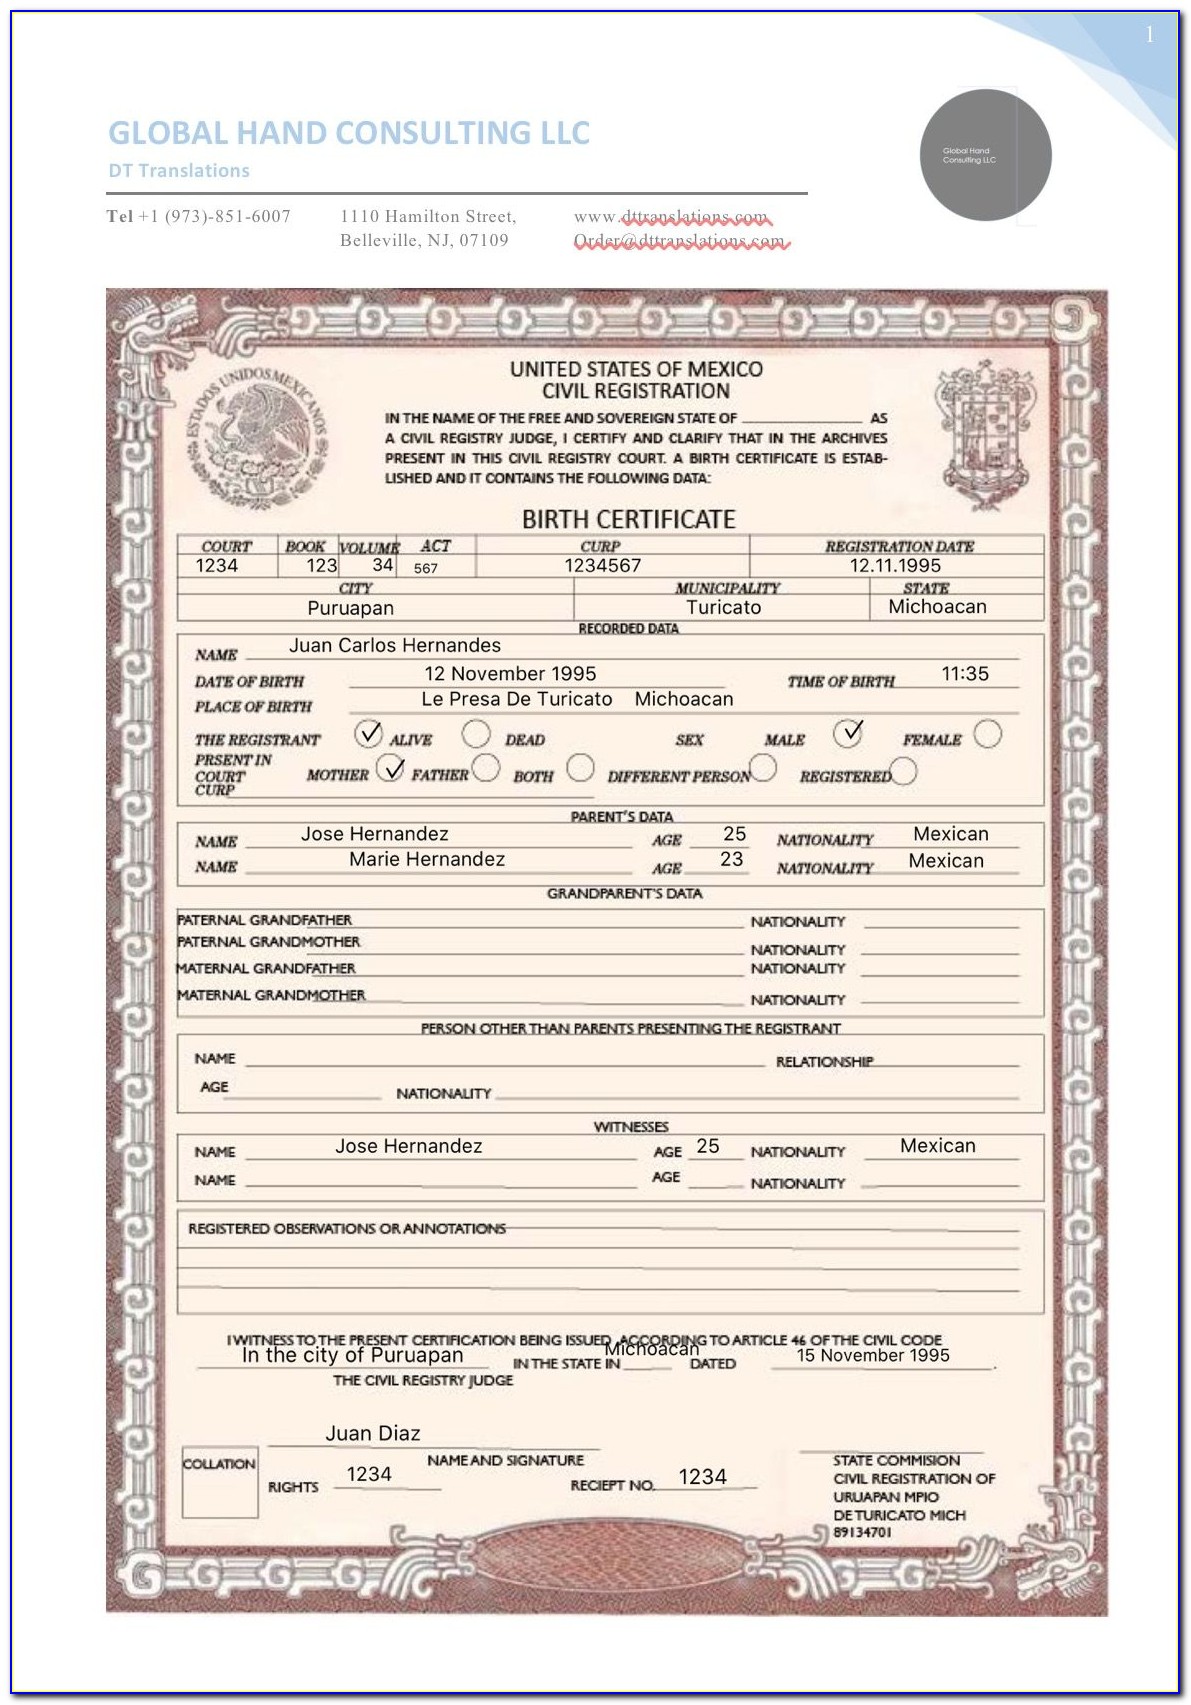 Tripler Army Medical Center Birth Certificate